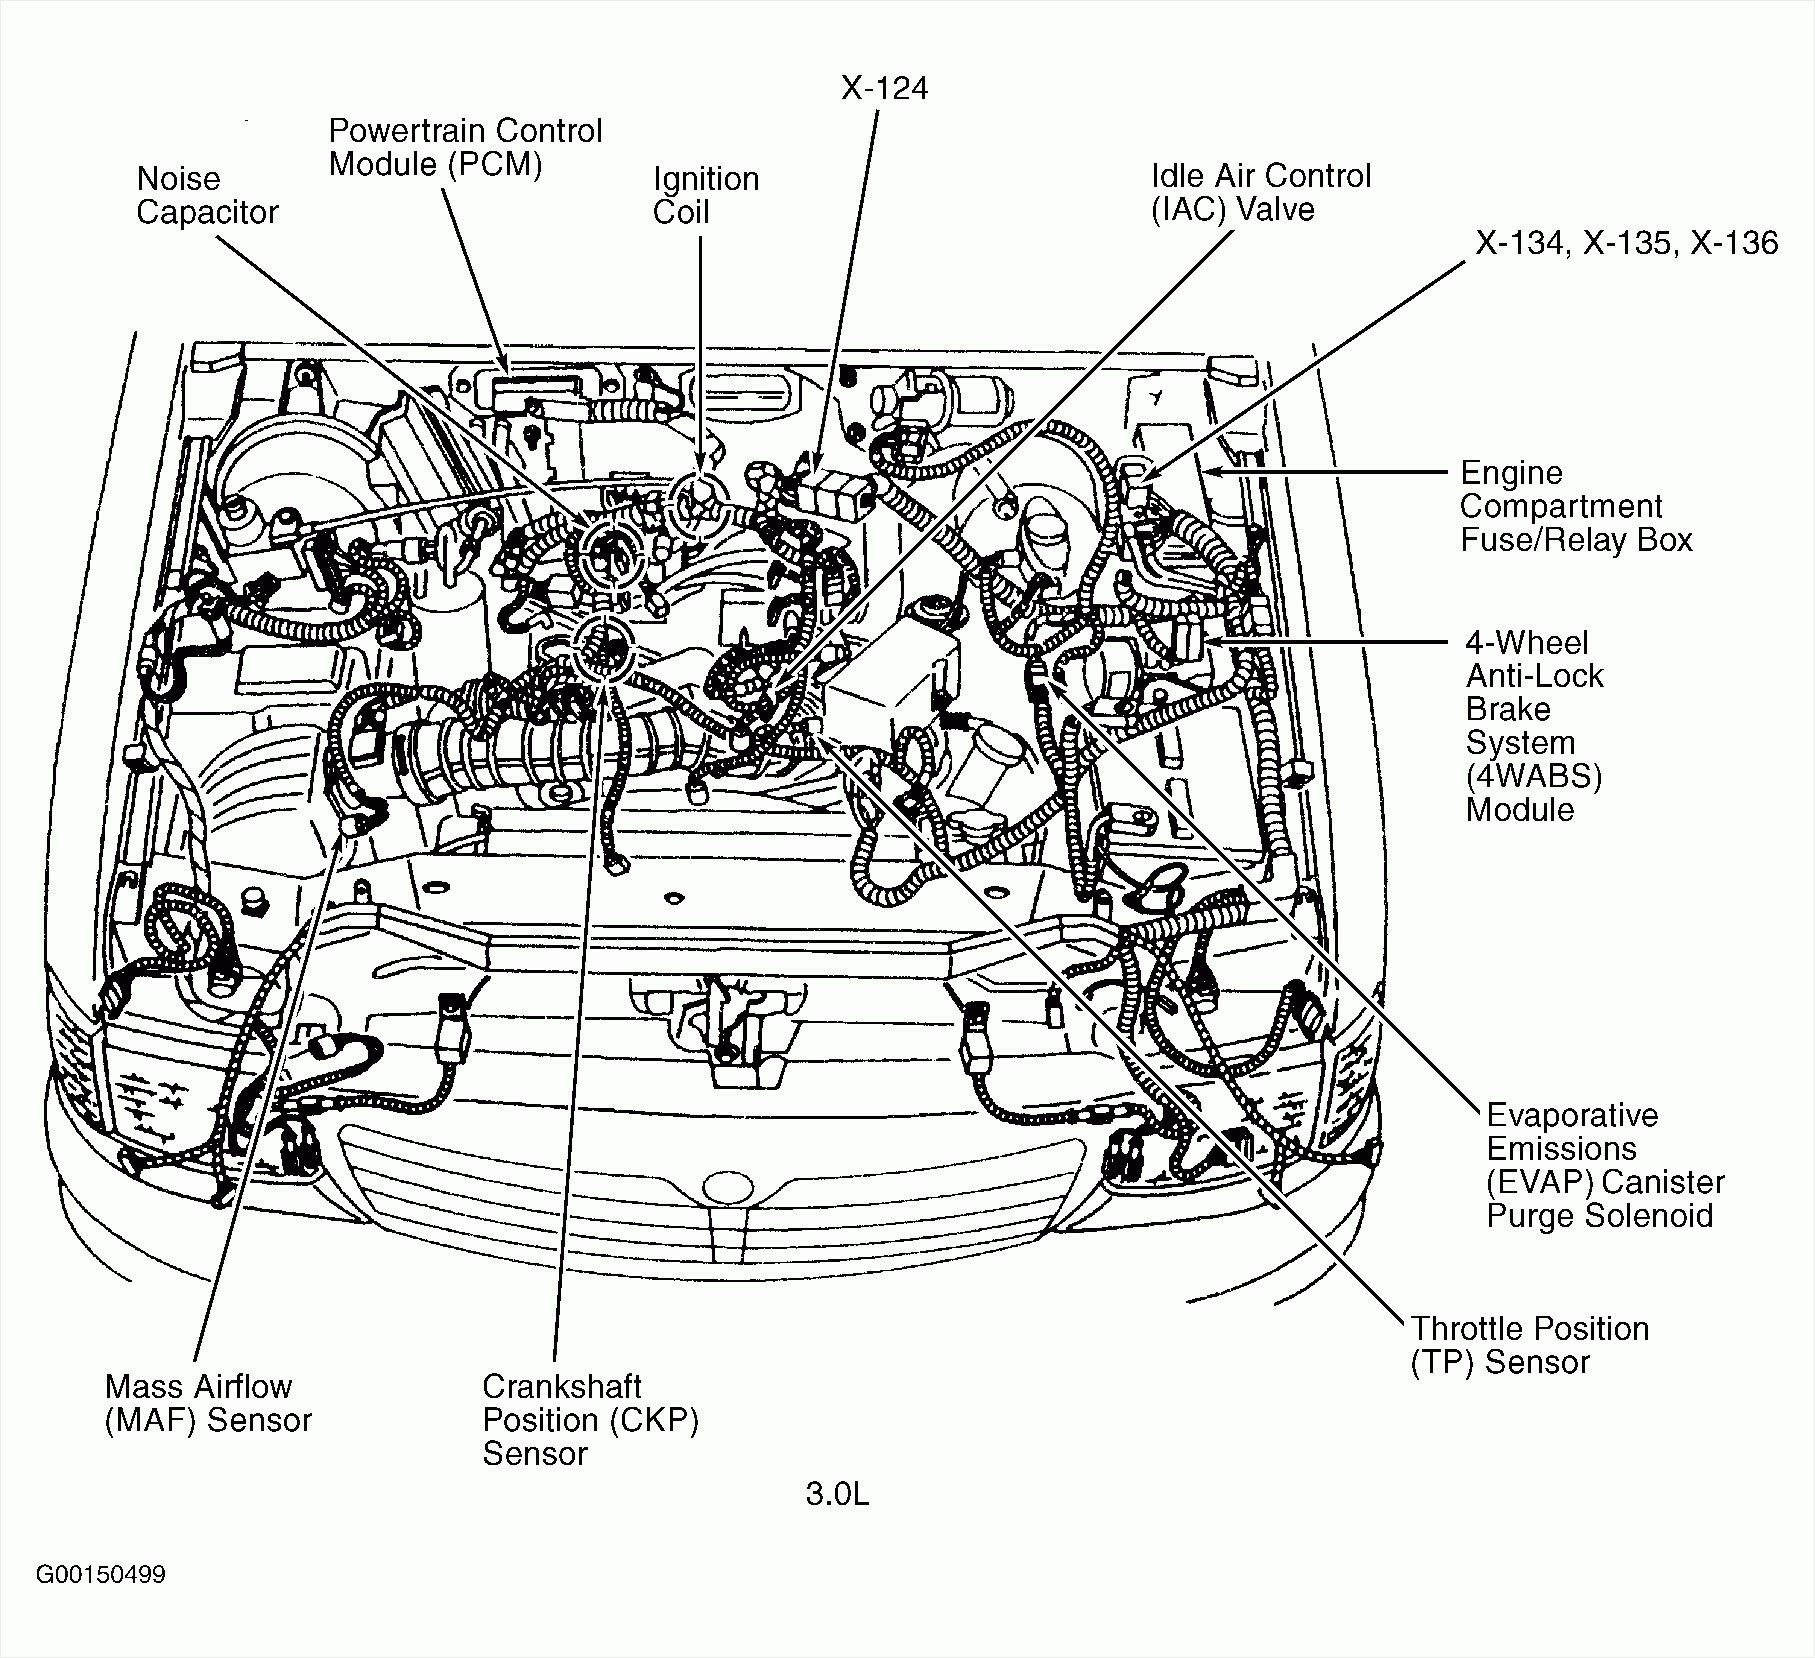 1999 Chevy Cavalier Engine Diagram Chevy 2 4 Engine Diagram Wiring Diagram Load Of 1999 Chevy Cavalier Engine Diagram